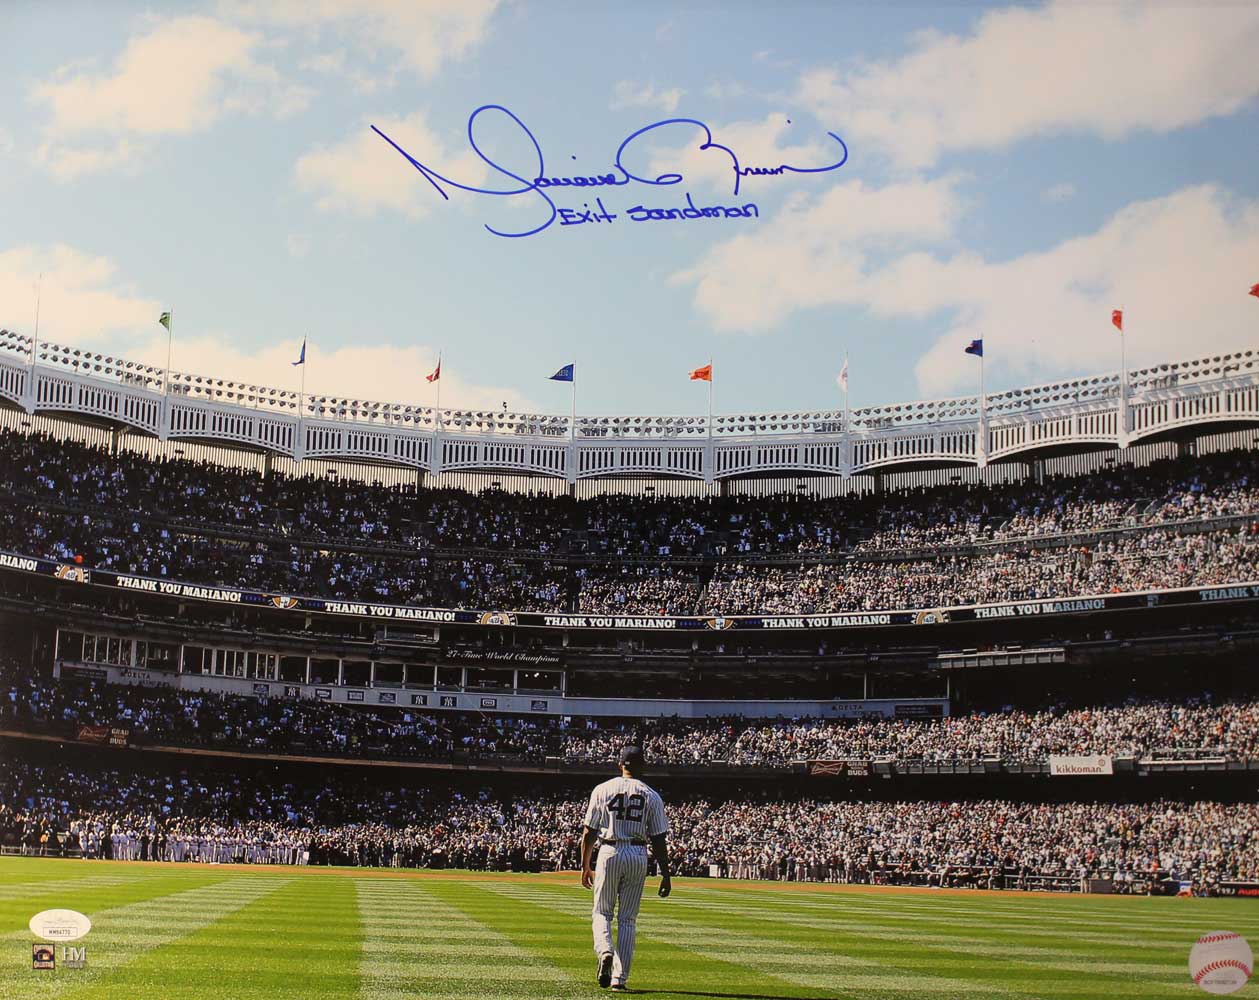 Mariano Rivera Signed New York Yankees 16x20 Photo Exit Sandman JSA 31403